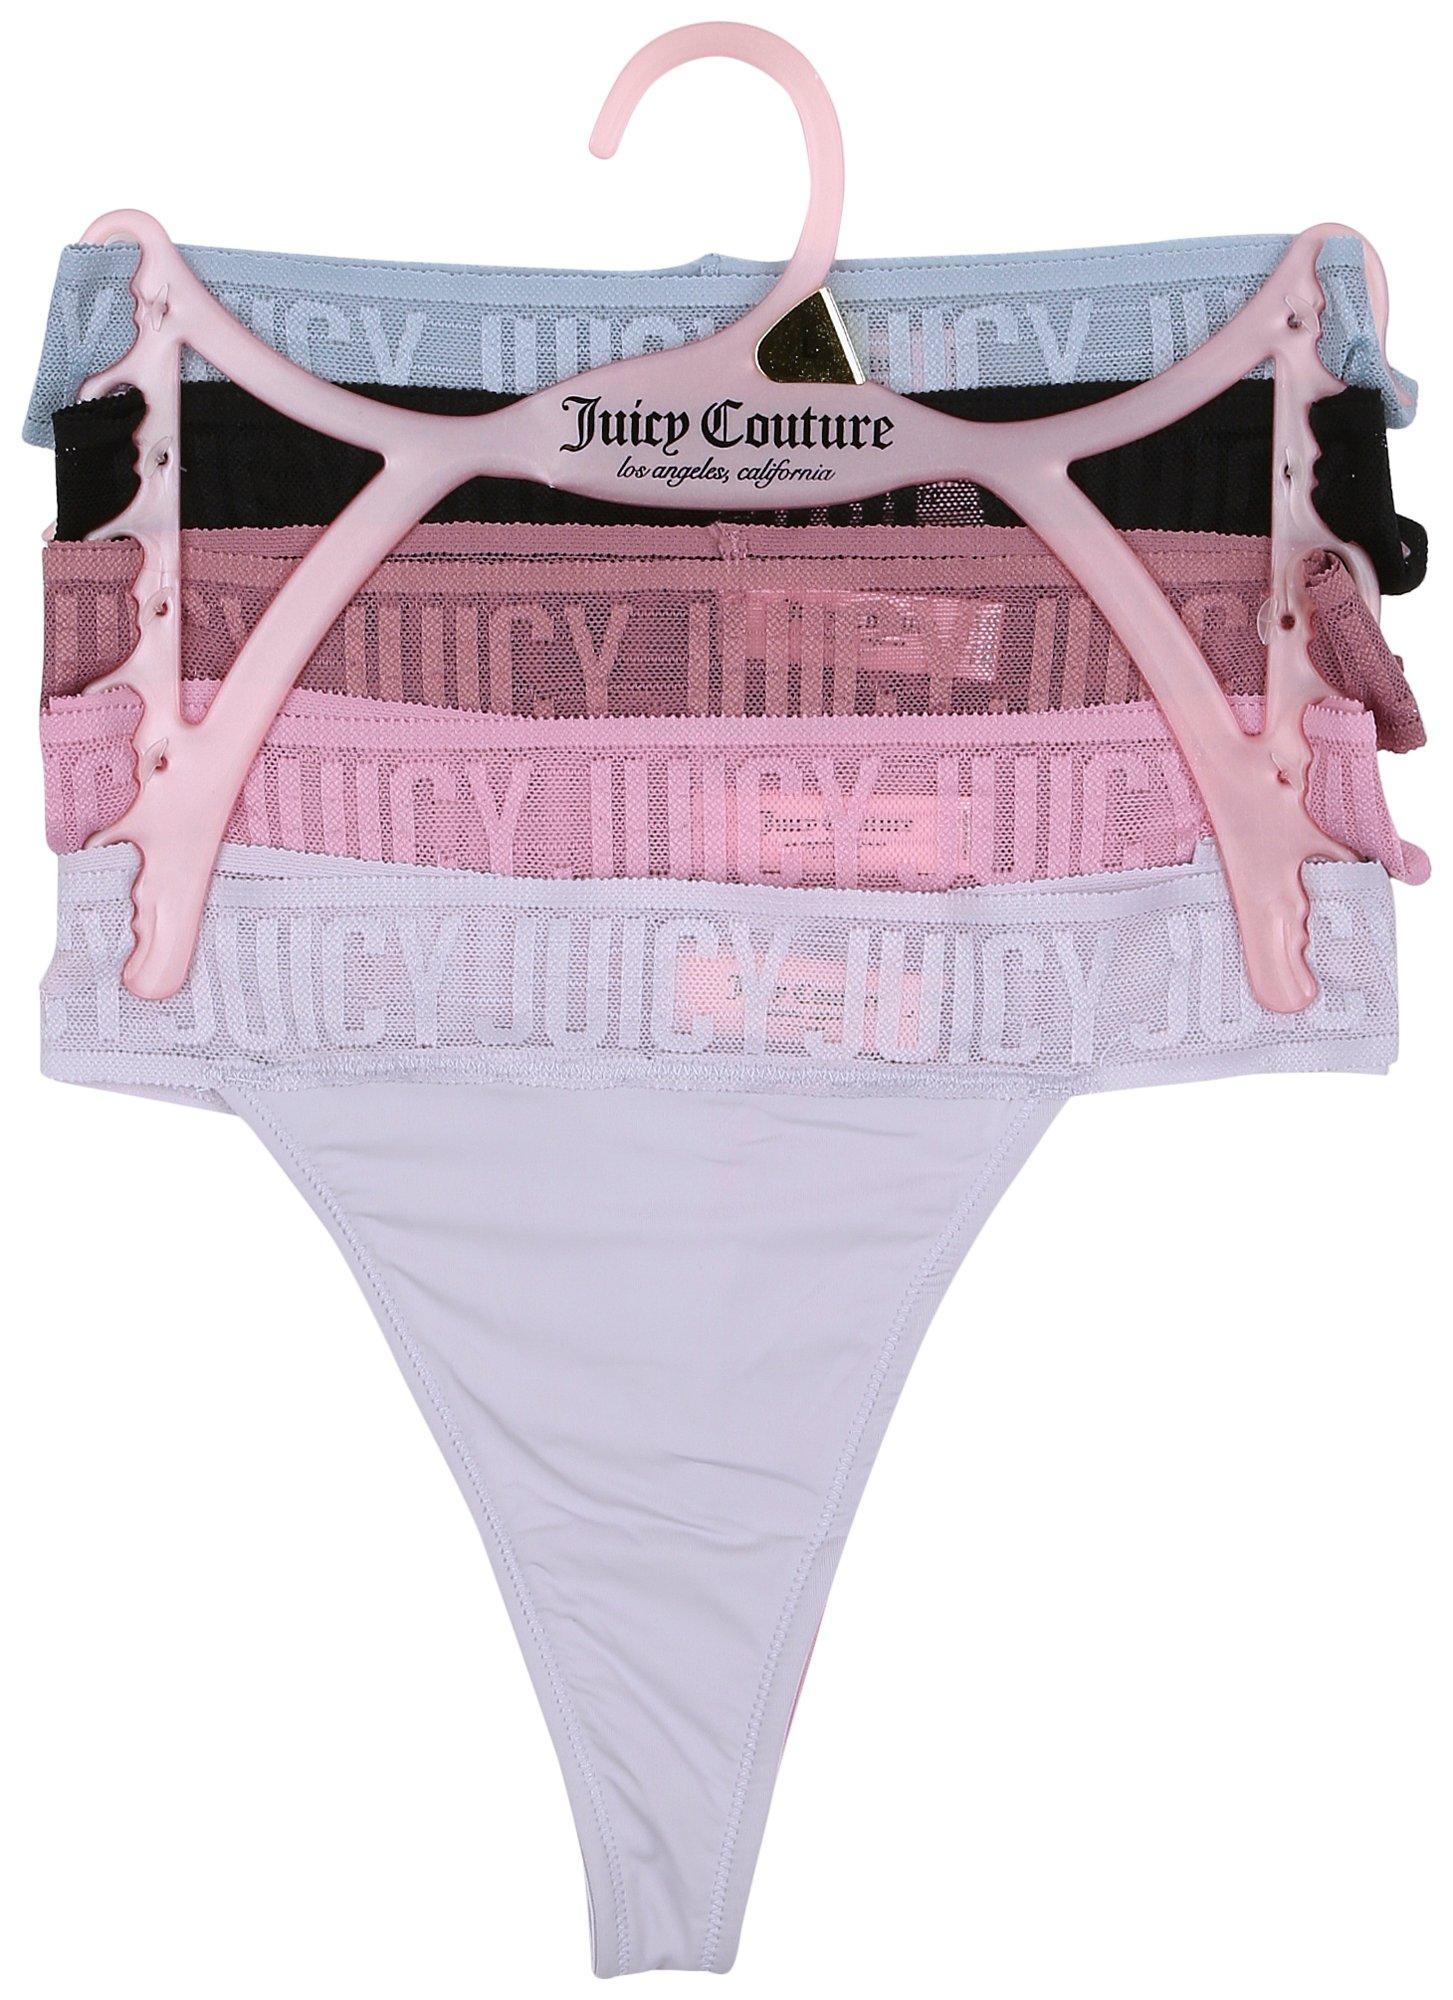 Juicy Couture Intimates Panties